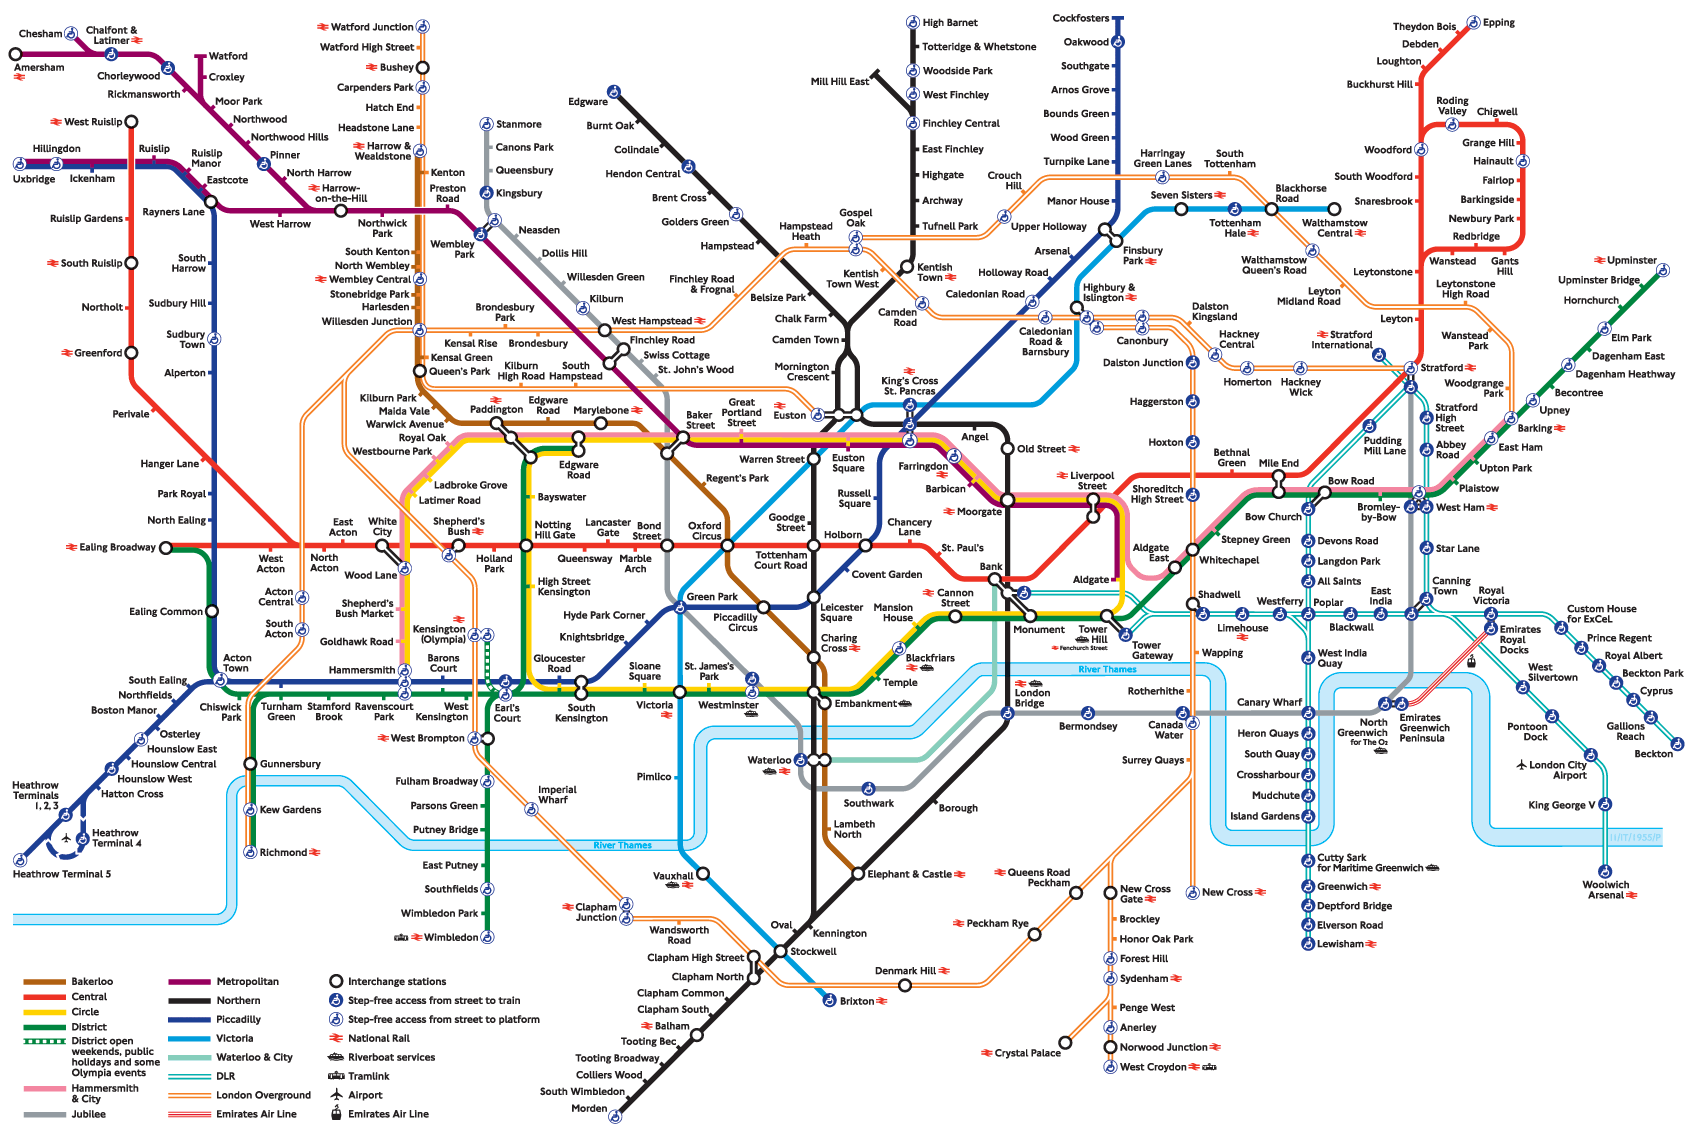 London Tube map